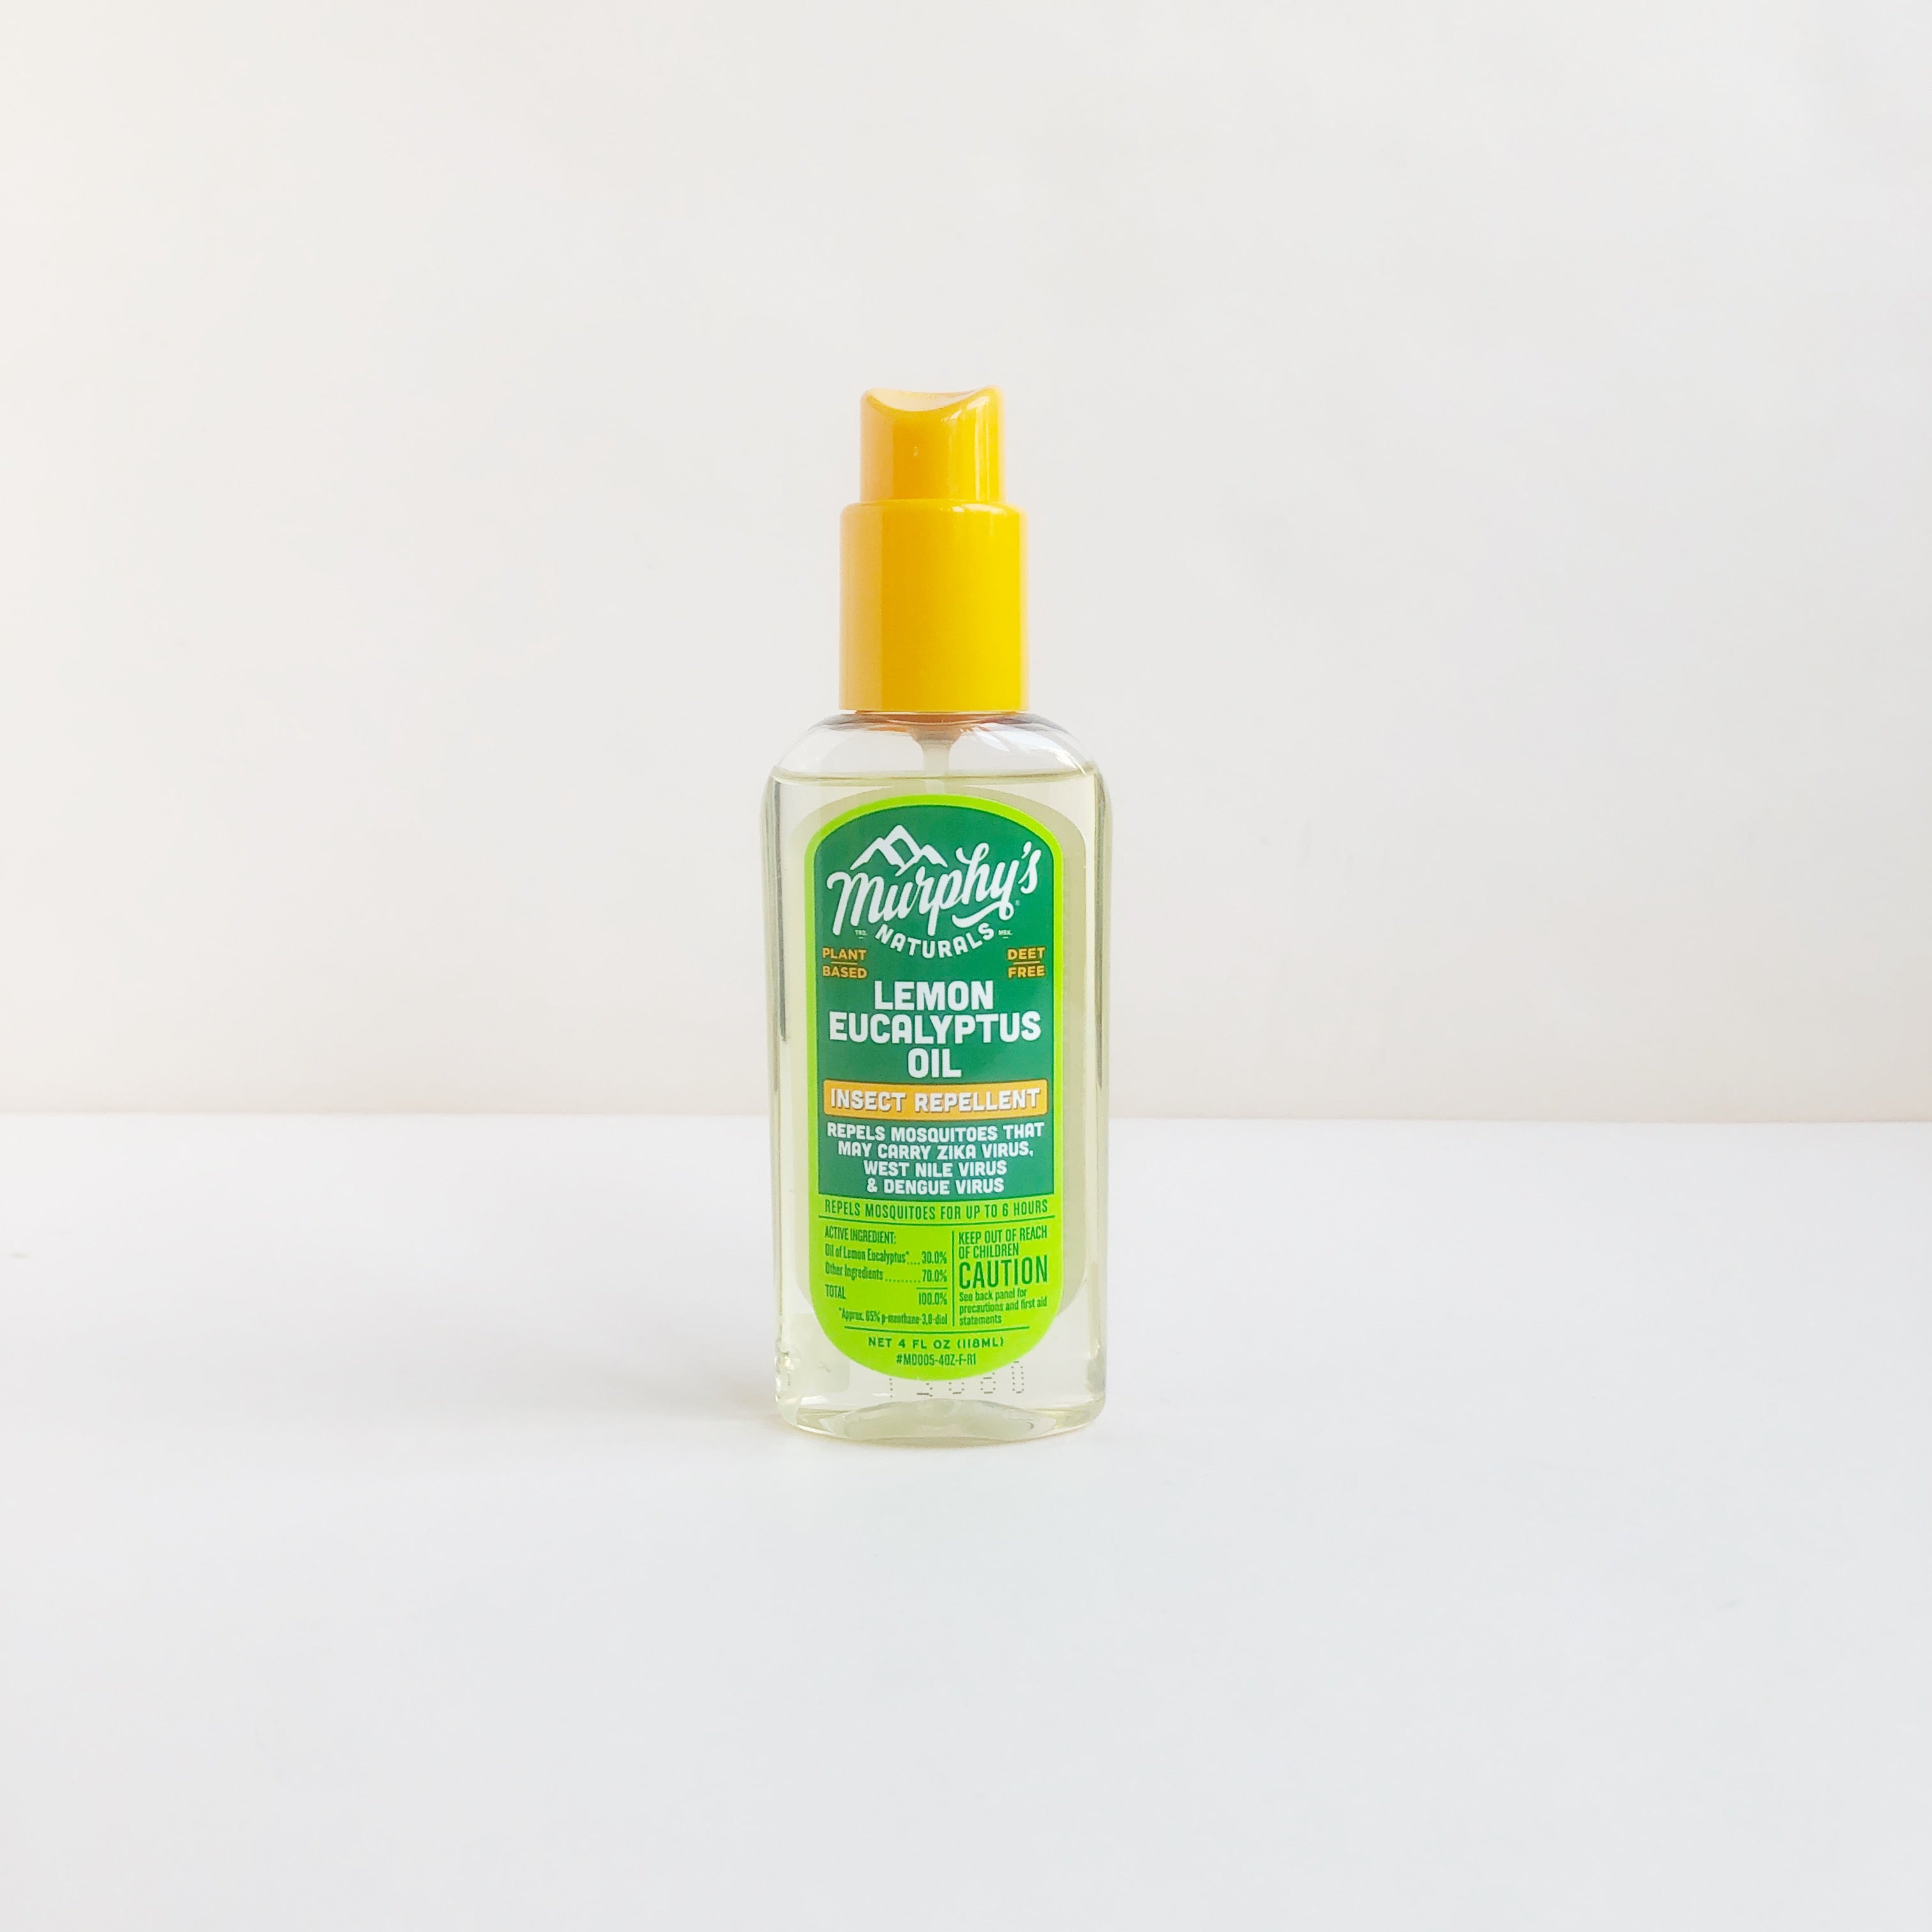 Lemon Eucalyptus Oil Insect Repellent